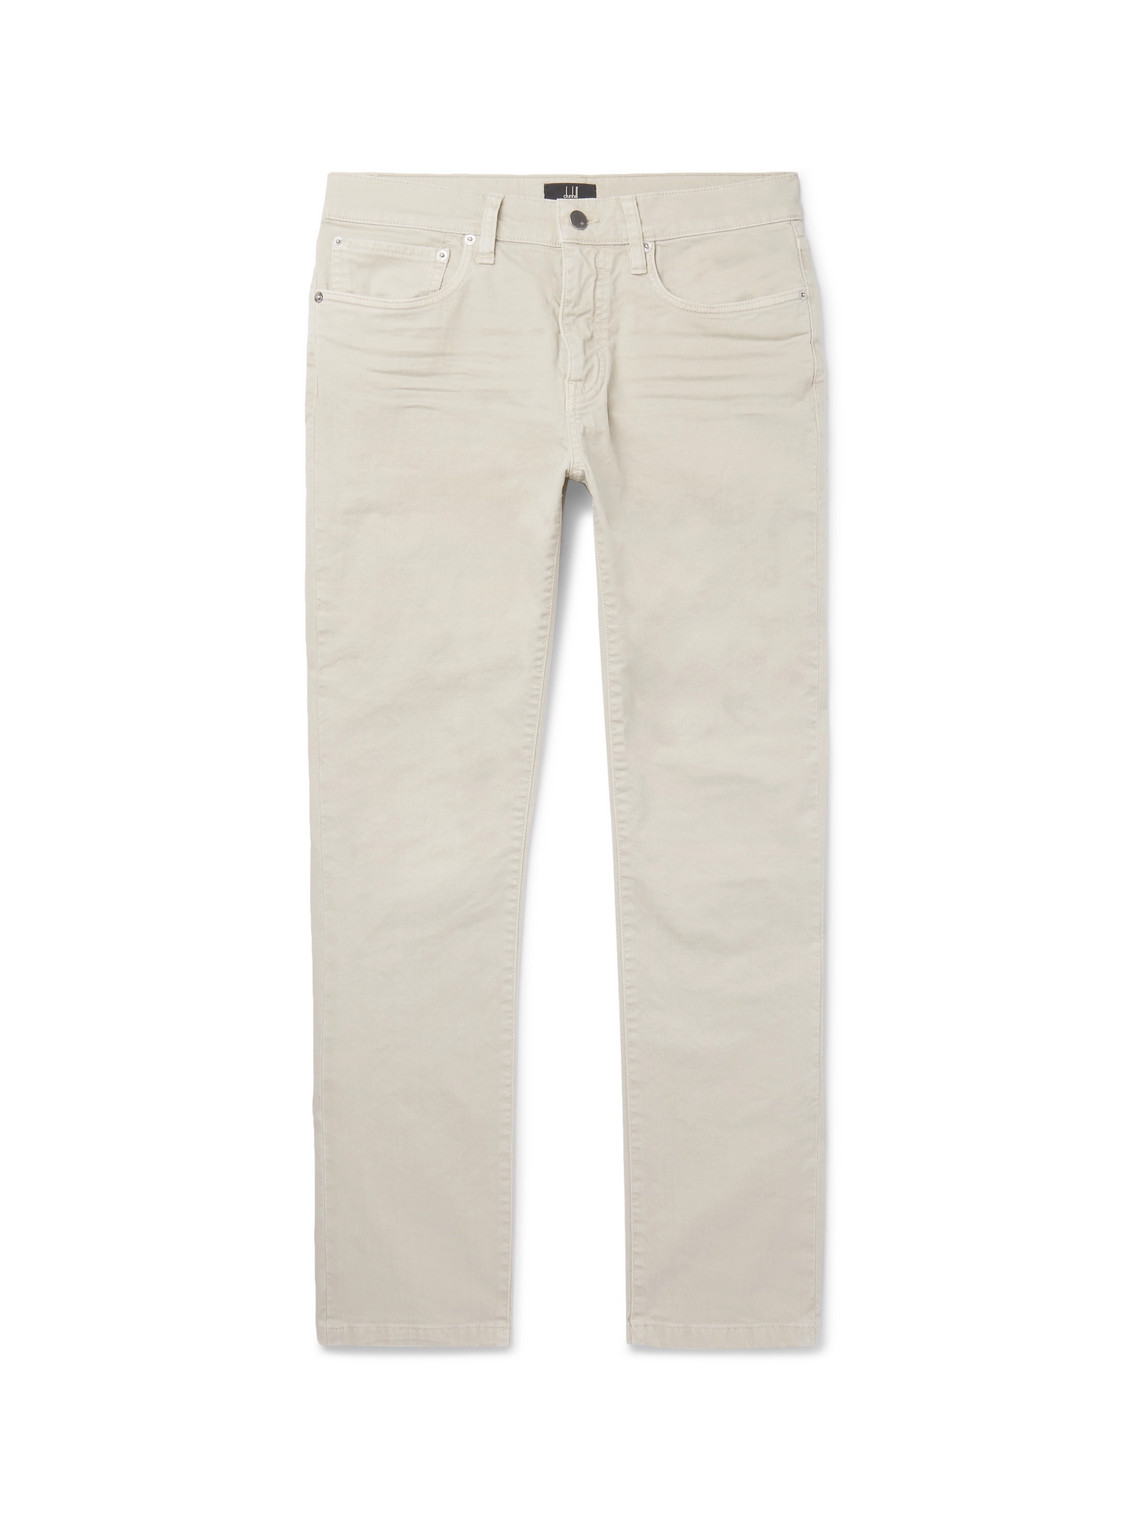 Dunhill Slim-Fit Stretch-Denim Jeans | Smart Closet